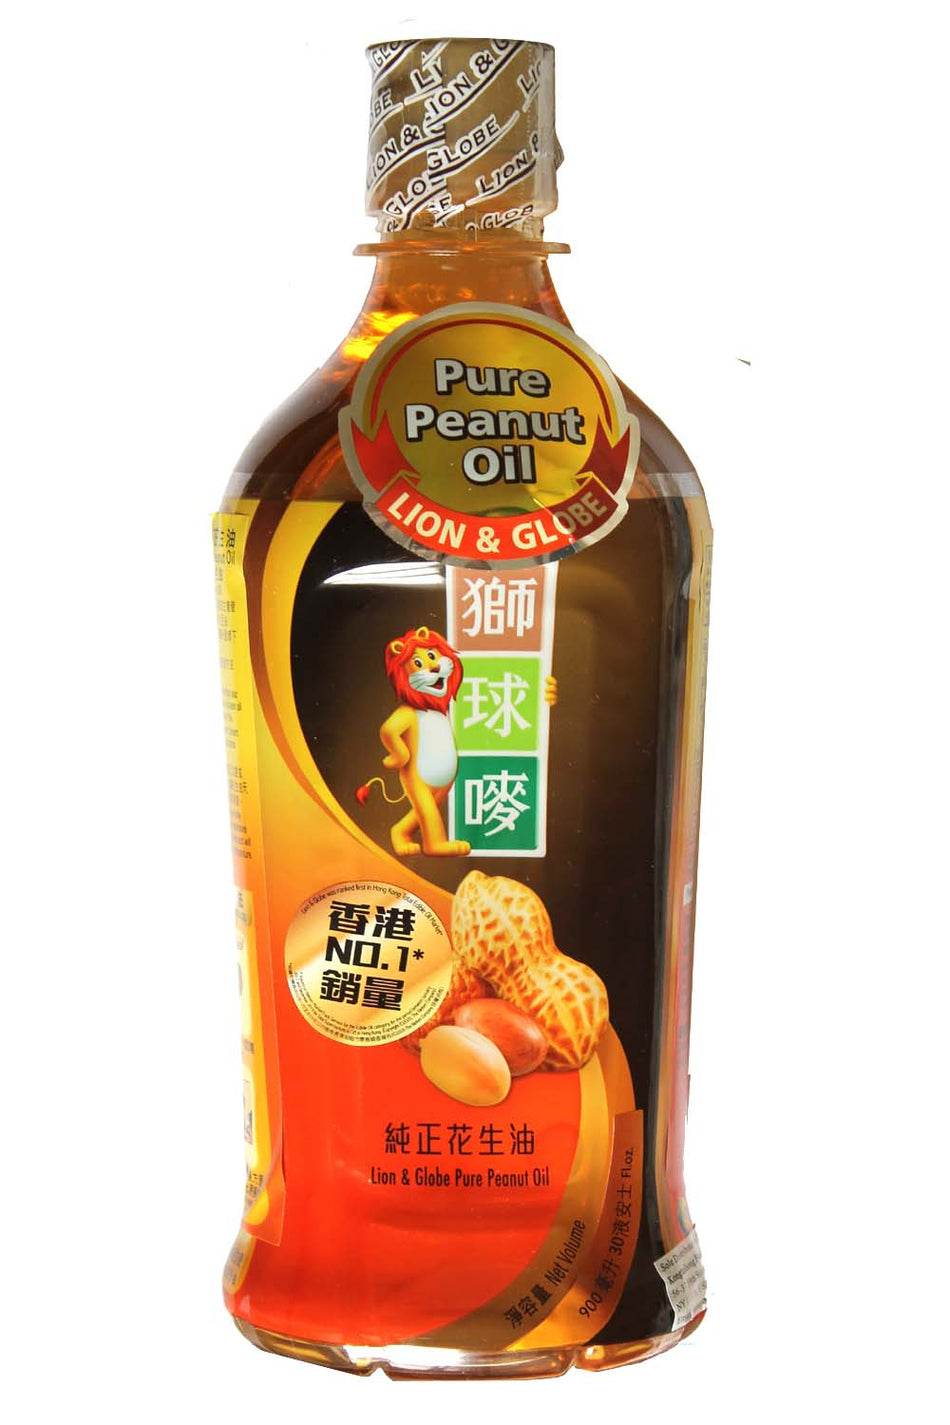 Lion & Globe Pure Peanut Oil